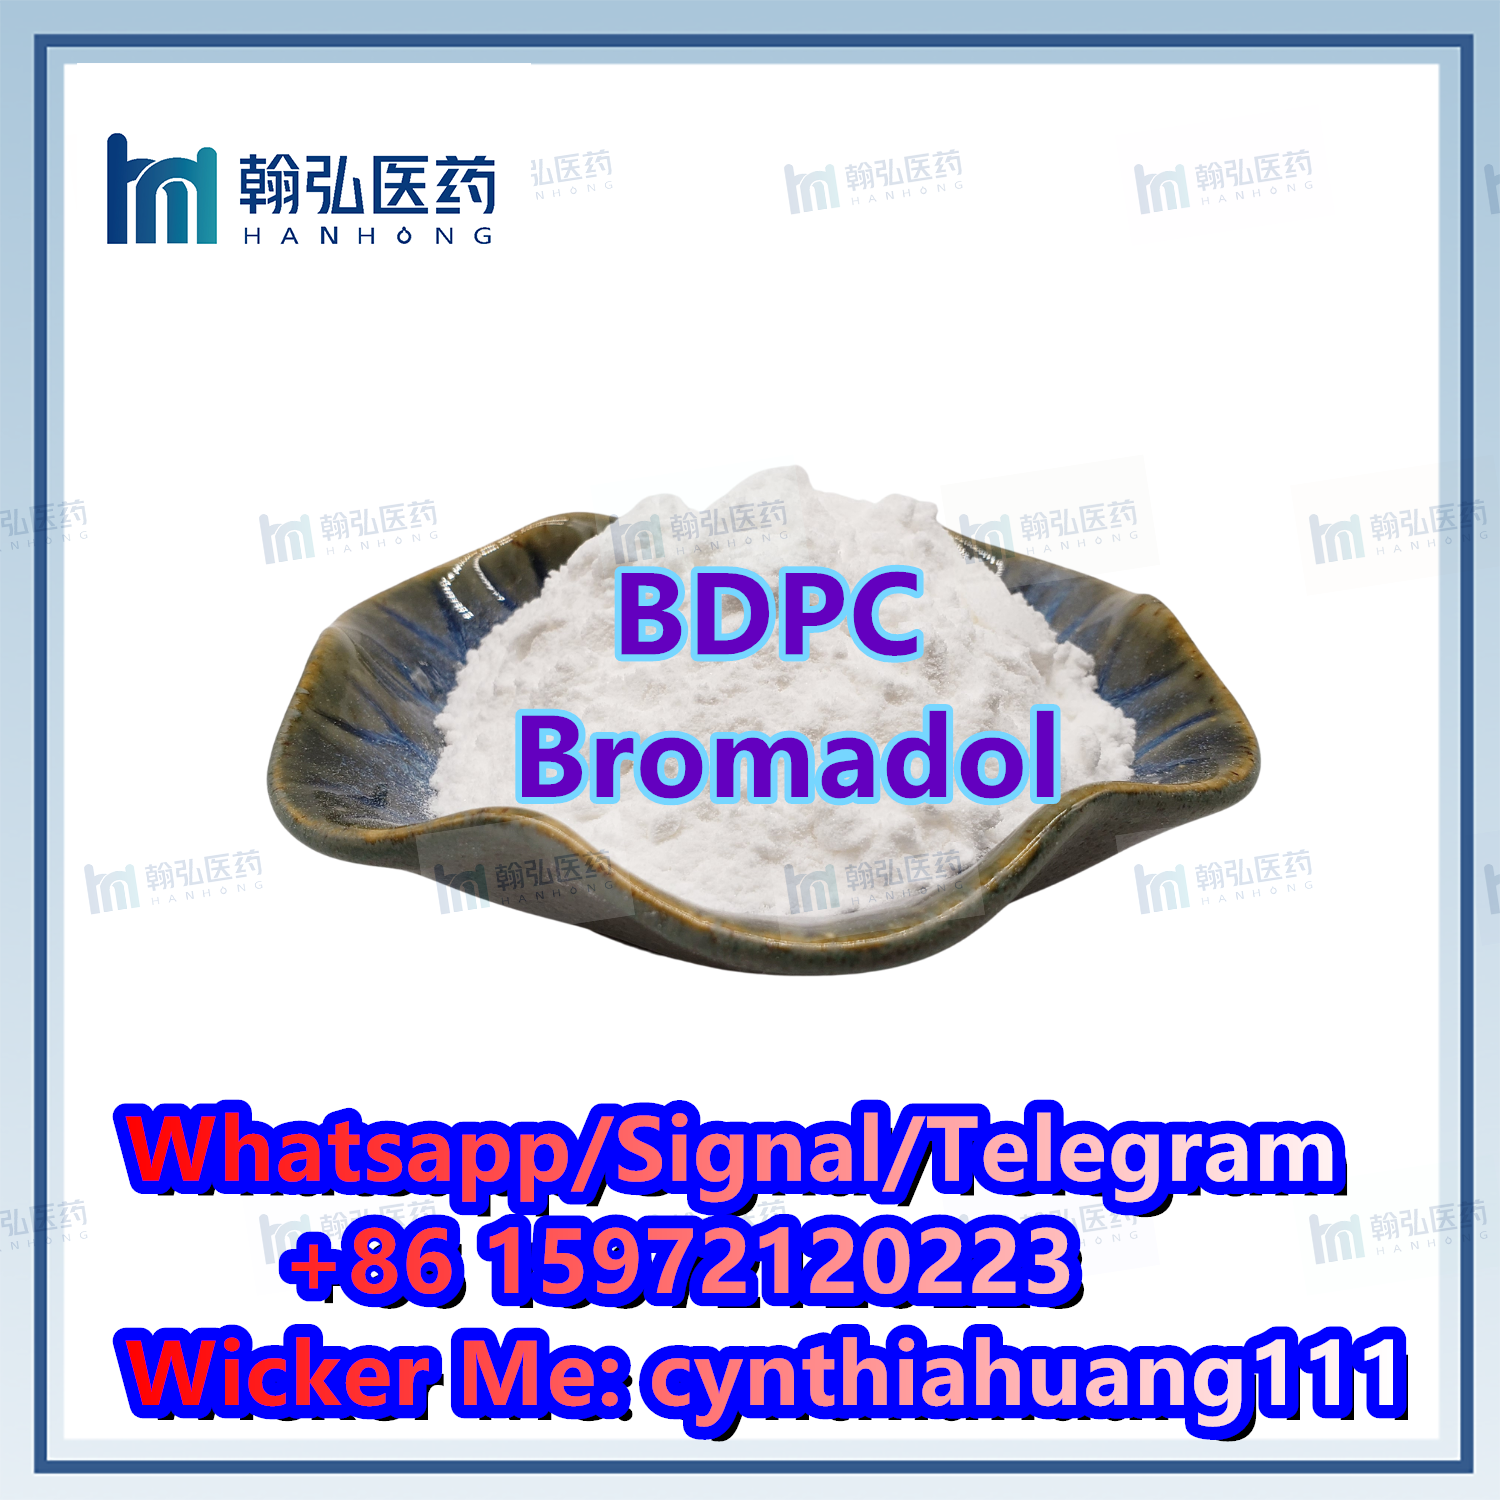  Mexico USA Bromadol HCl Bdpc CAS 77239-98-6 Whatsapp/Signal/Telegaram: +86 15972120223 Wicker: cynthiahuang1111